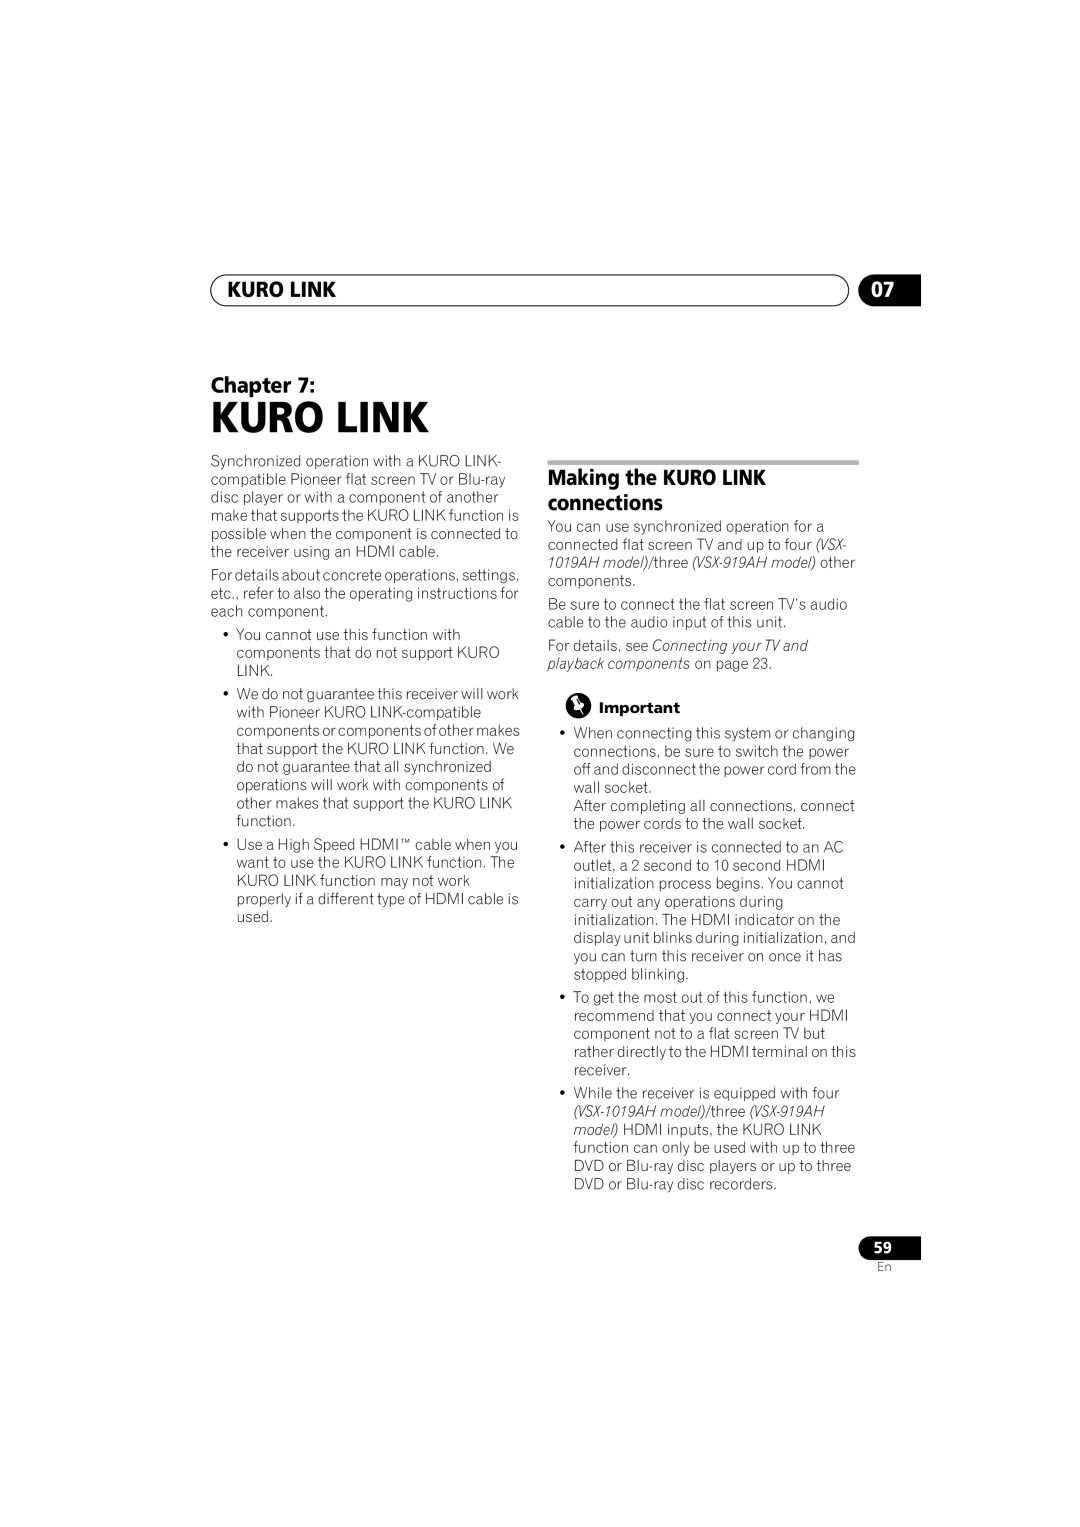 Pioneer VSX-919AH-S manual Kuro Link, KURO LINK Chapter, Making the KURO LINK connections 